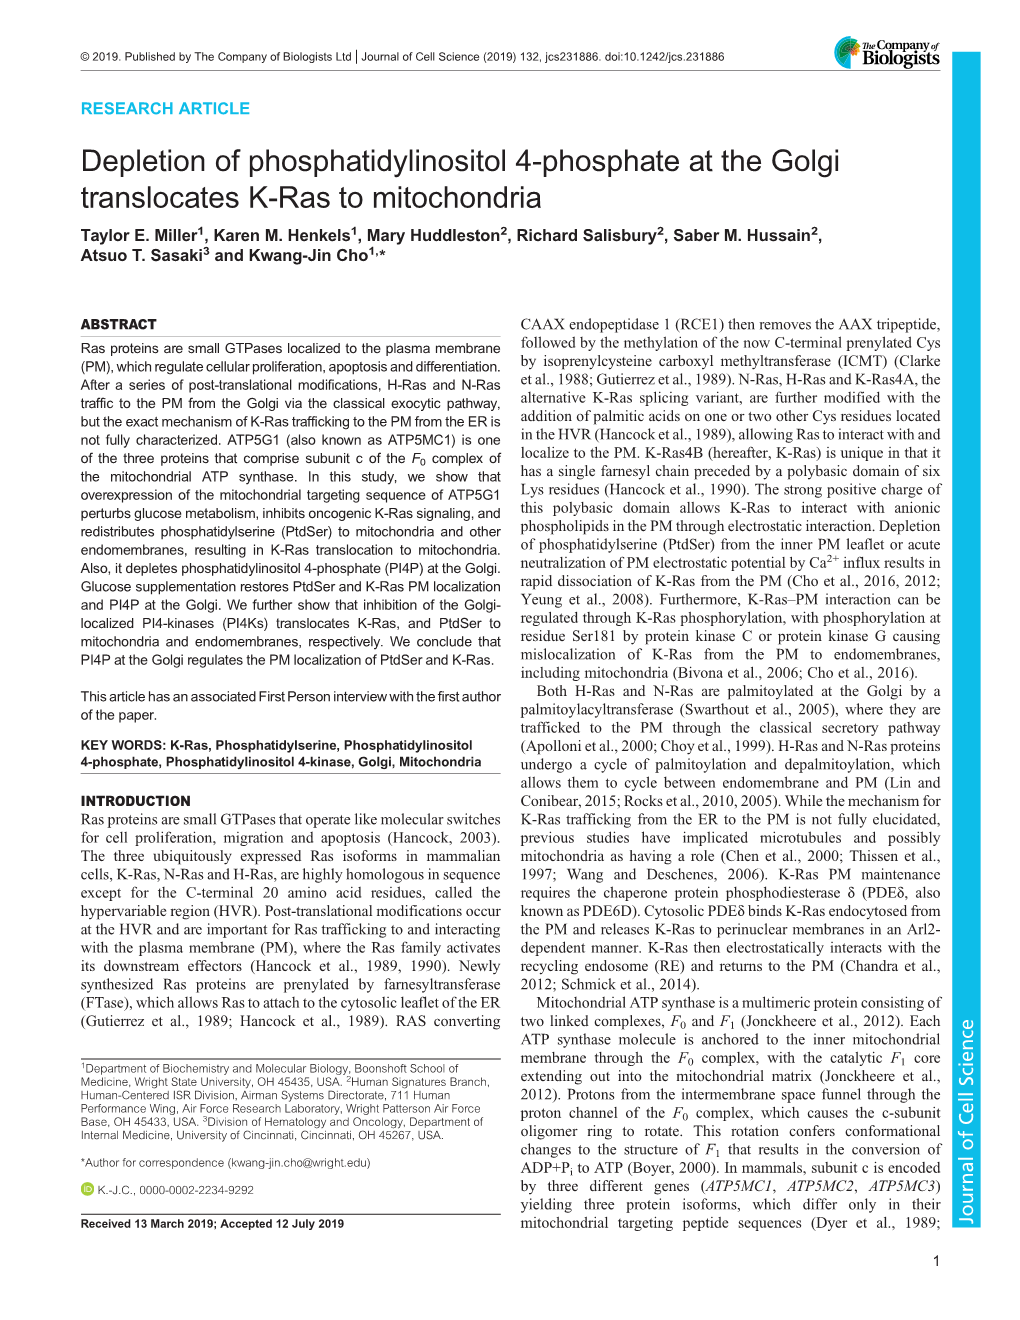 Depletion of Phosphatidylinositol 4-Phosphate at the Golgi Translocates K-Ras to Mitochondria Taylor E